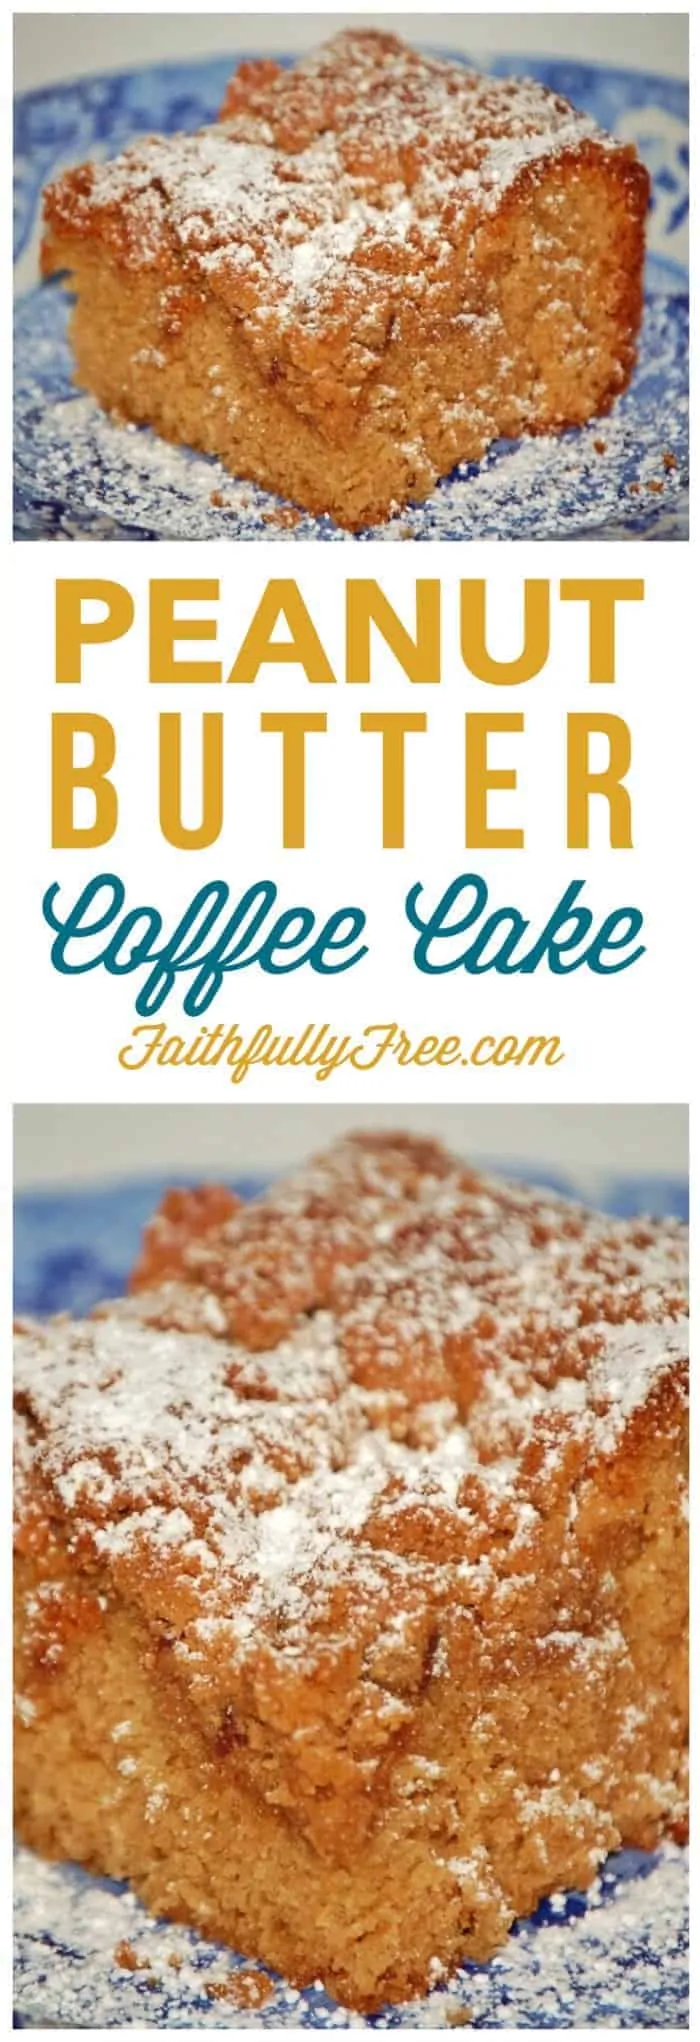 Peanut Butter Coffee Cake Recipe